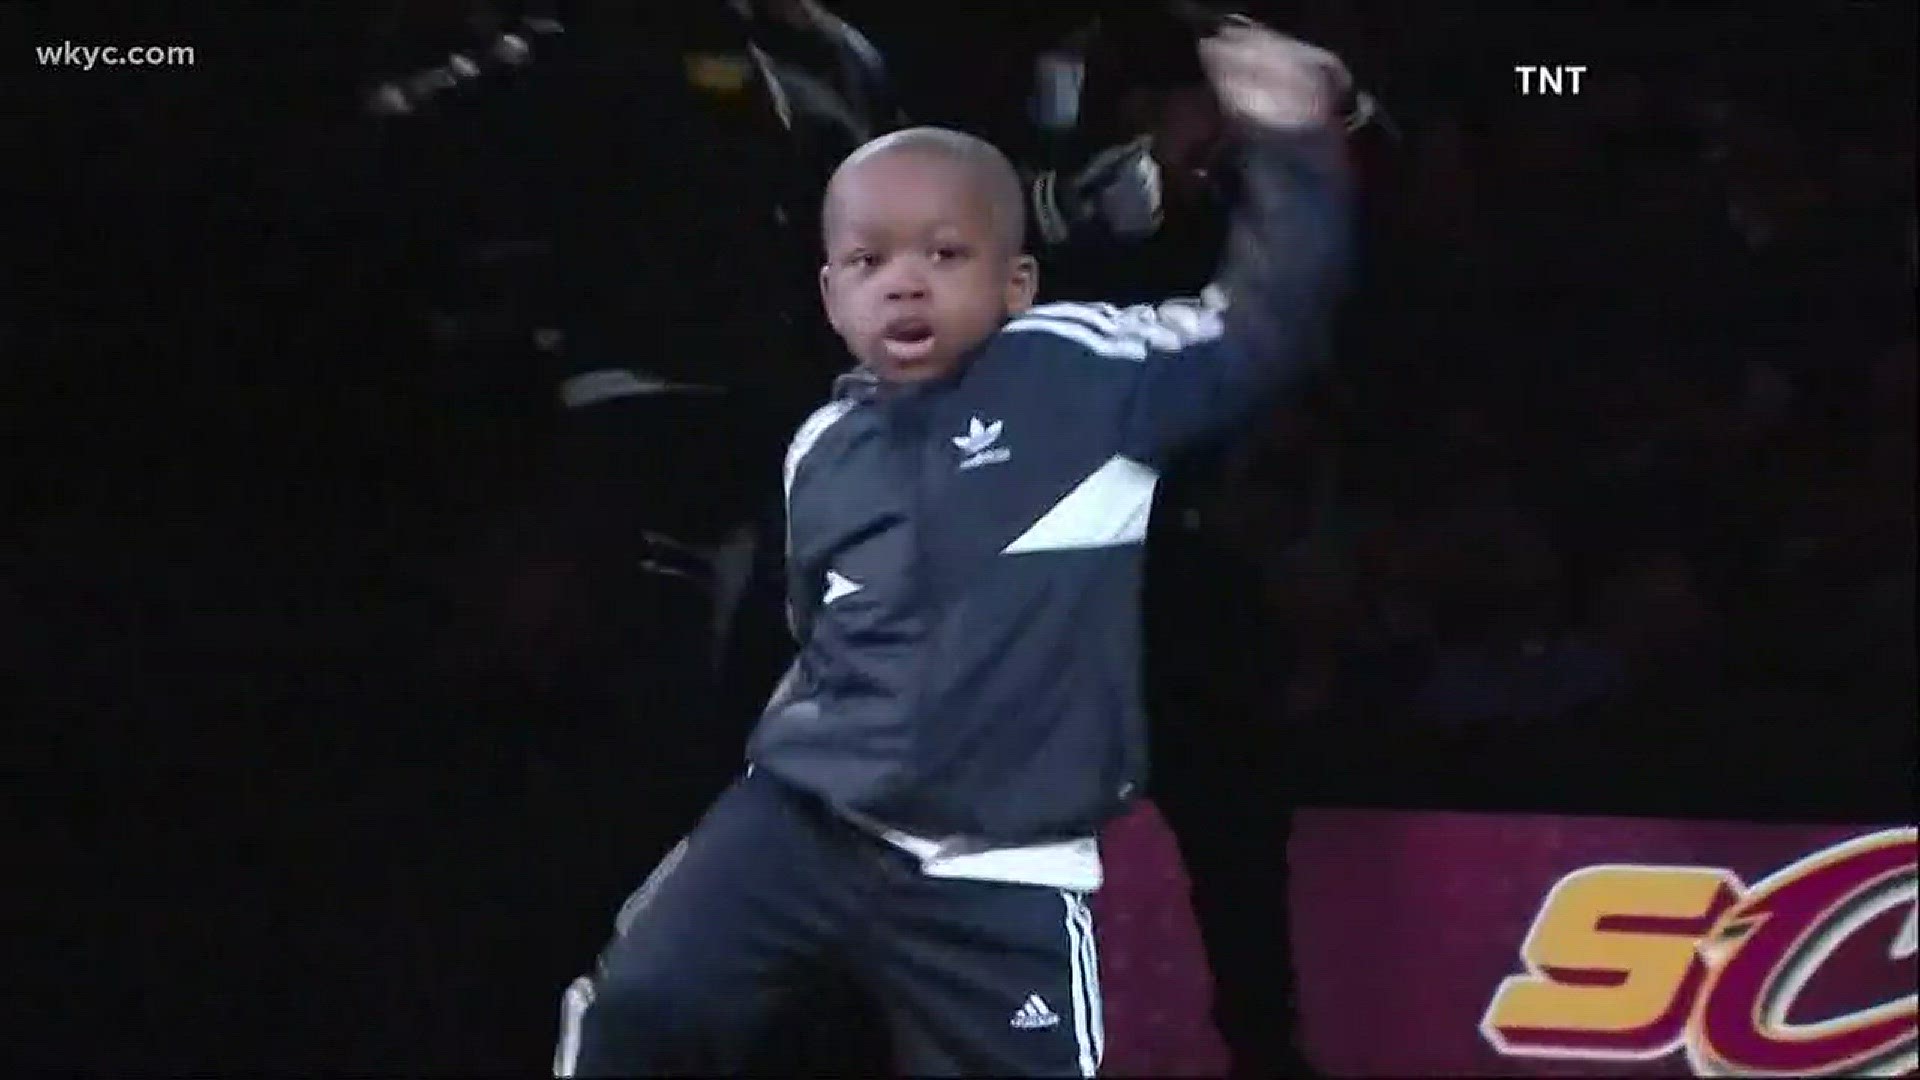 5-year-old Tavaris Jones puts on show during Cavs-Warriors game